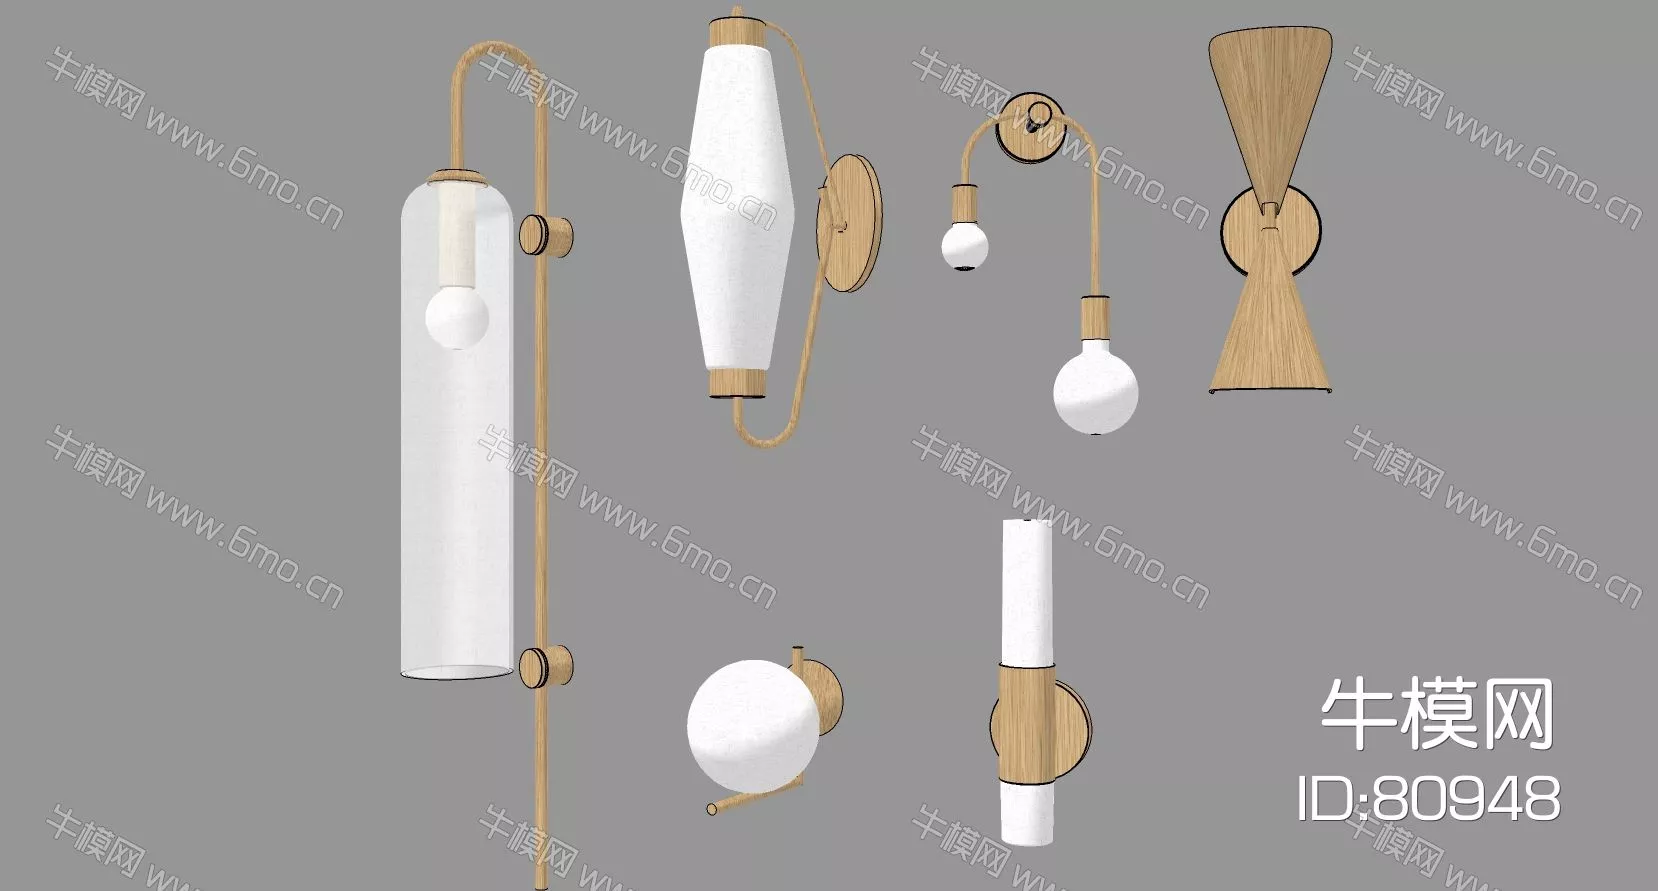 NORDIC WALL LAMP - SKETCHUP 3D MODEL - ENSCAPE - 80948